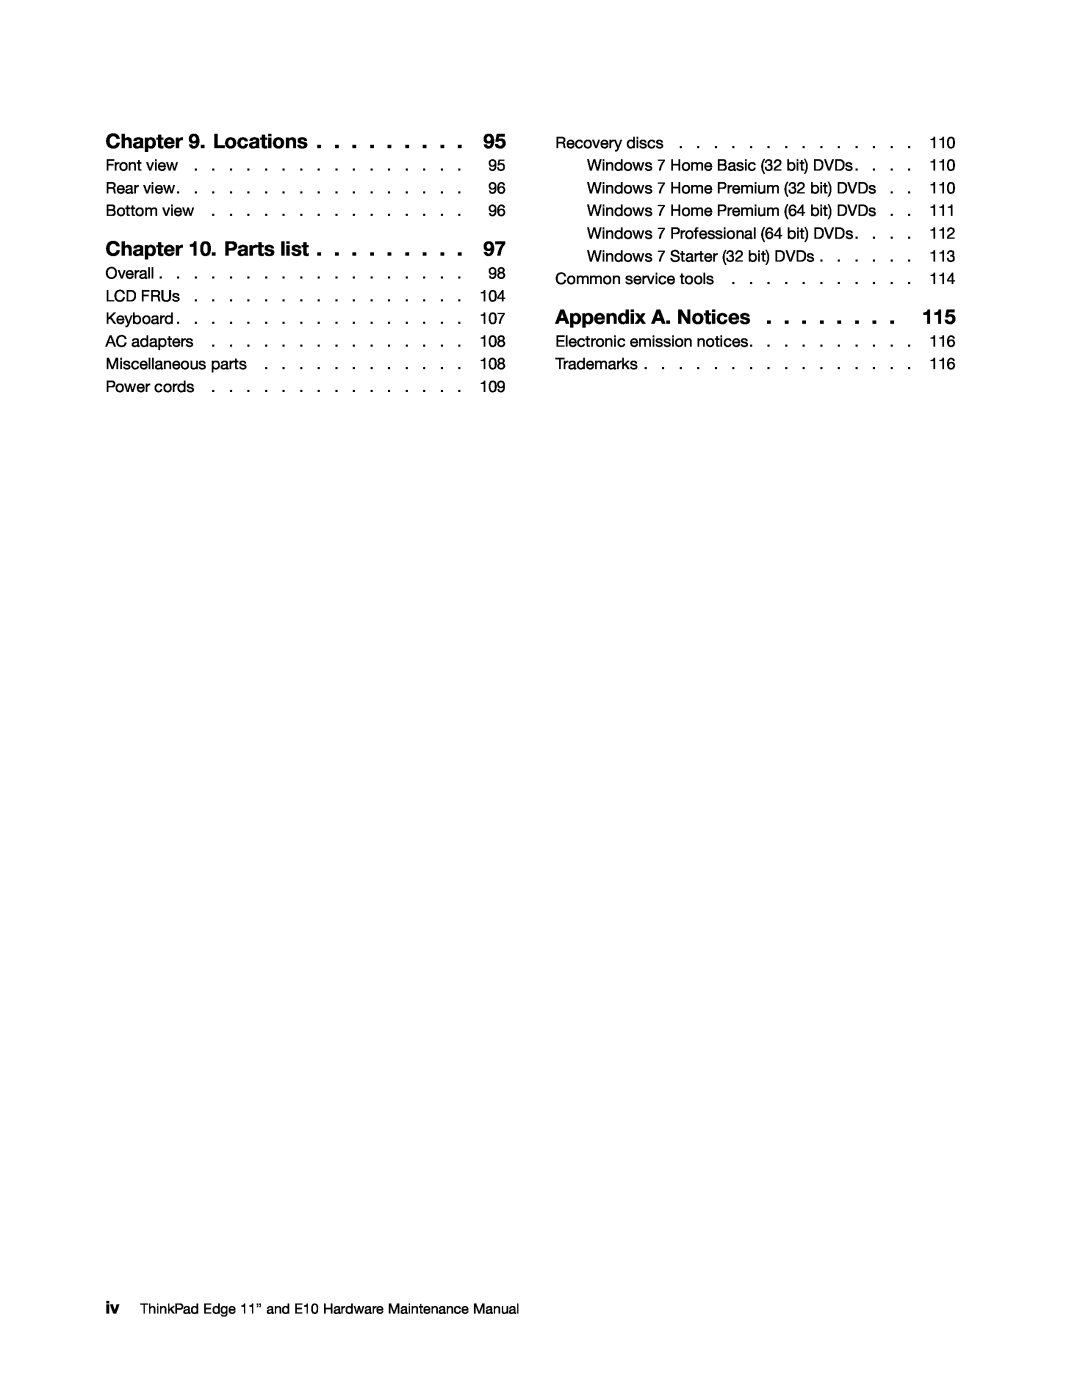 Lenovo manual Locations, Parts list, Appendix A. Notices, iv ThinkPad Edge 11” and E10 Hardware Maintenance Manual 